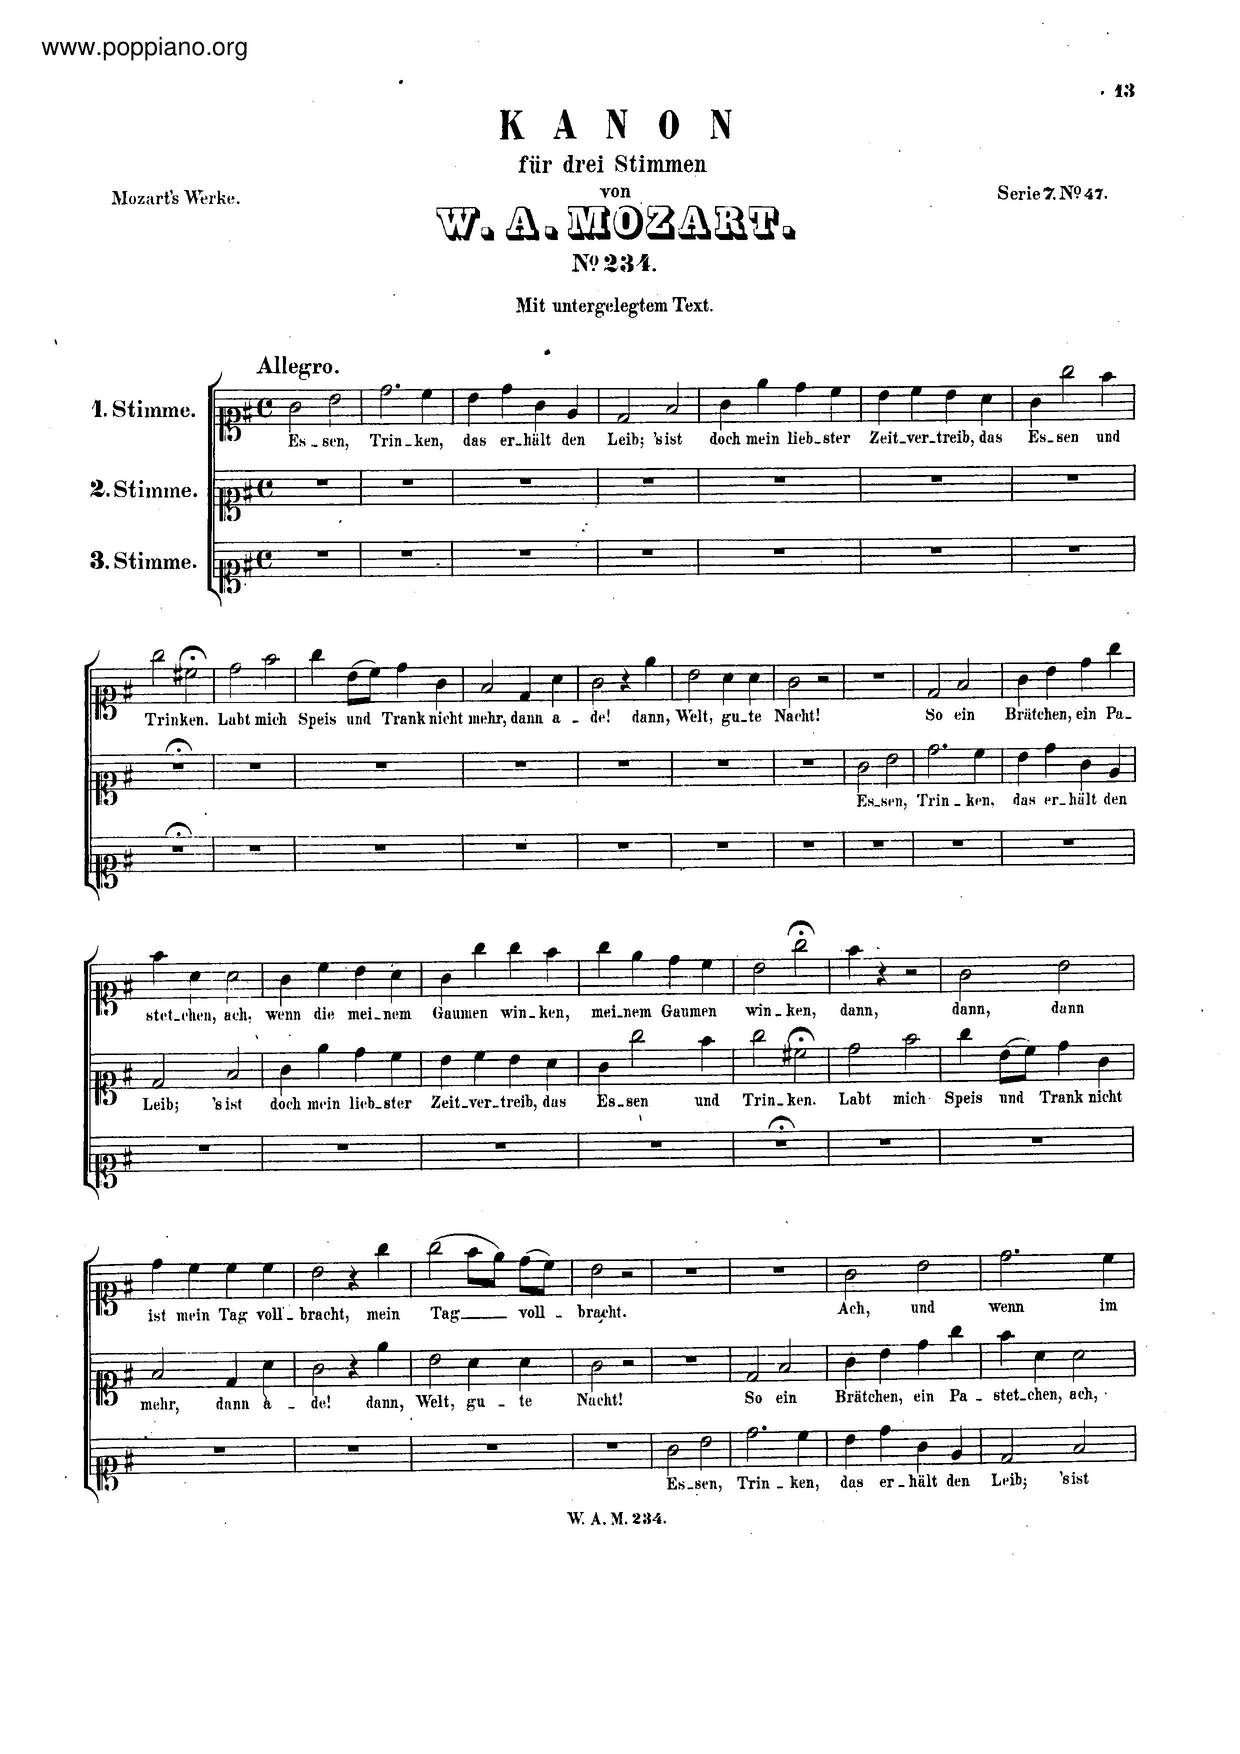 Canon For 3 Voices In G Major, K. 234/382E琴譜